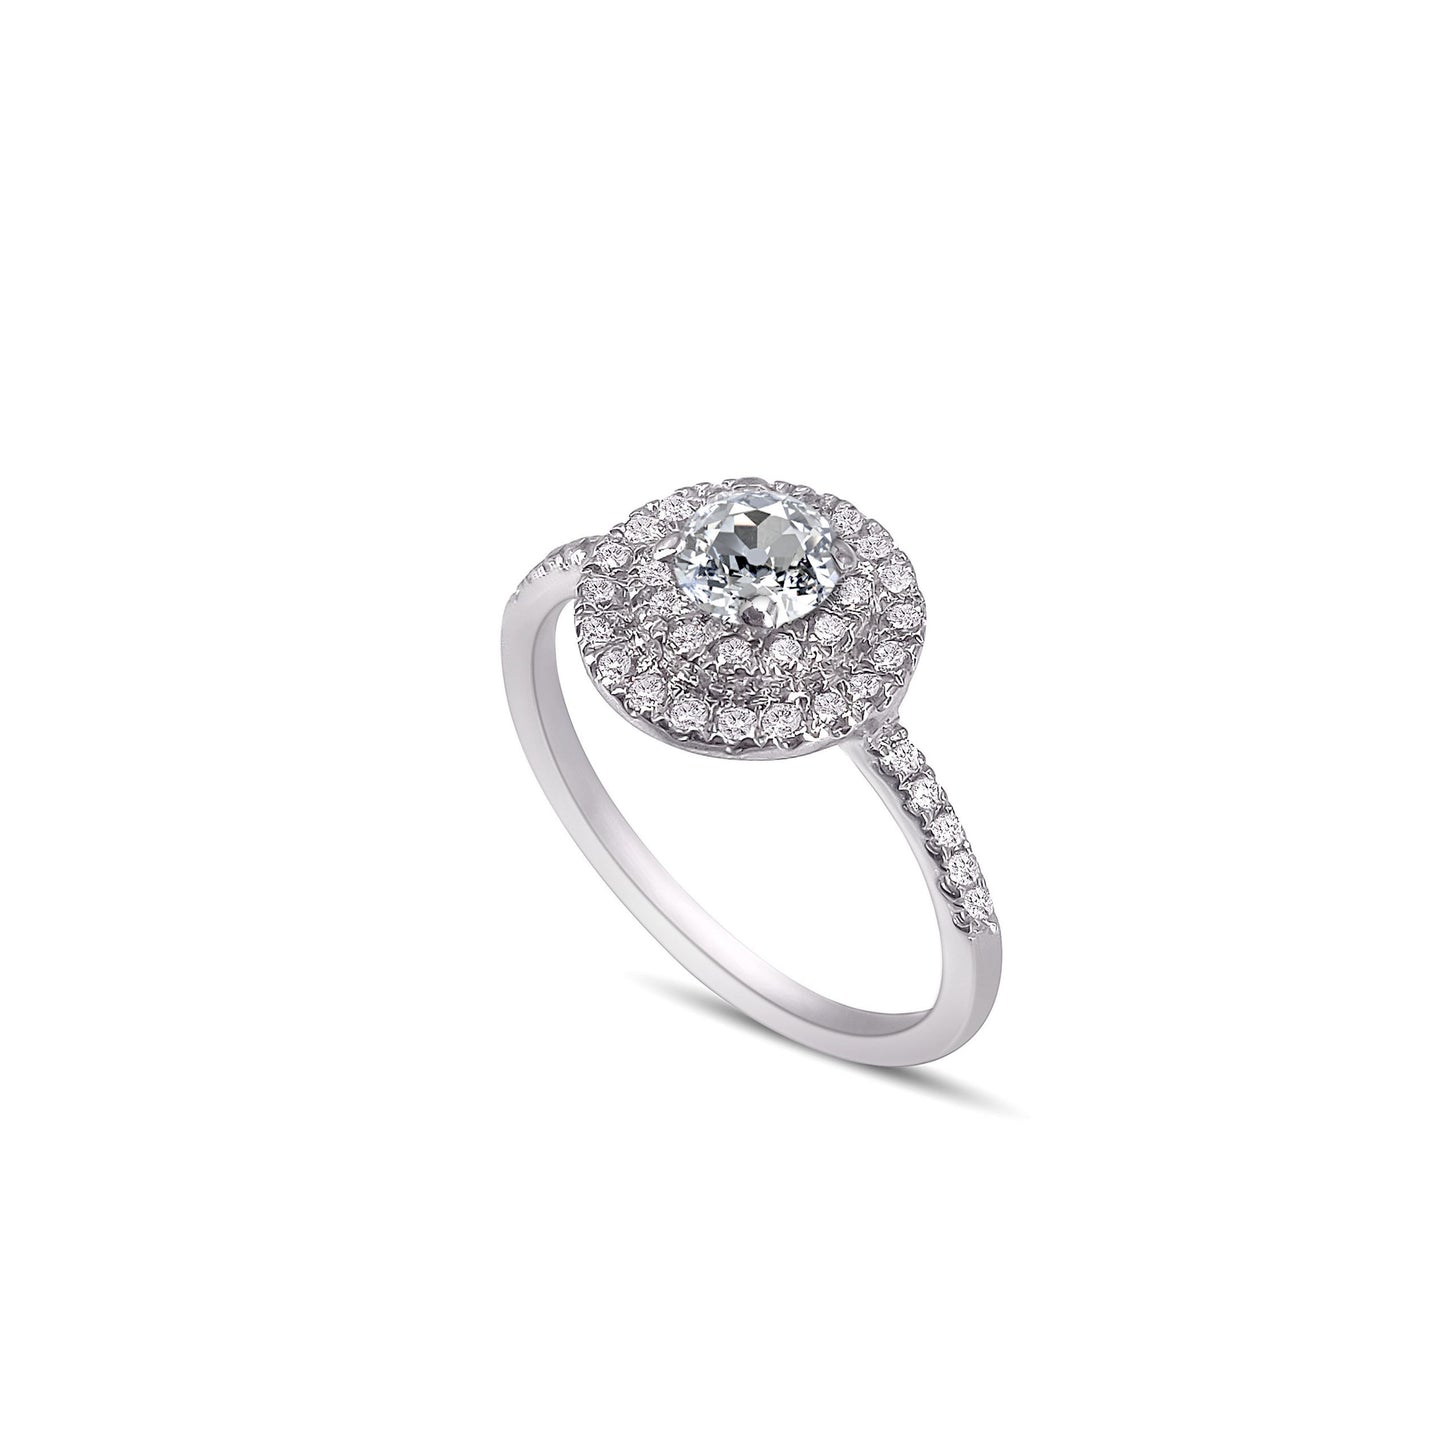 Amazing Quality,Center Diamond , Total diamond wt. 0.288ct. 14K OR 18K Gold Engagement Engagement Wedding Anniversary Gift Ring